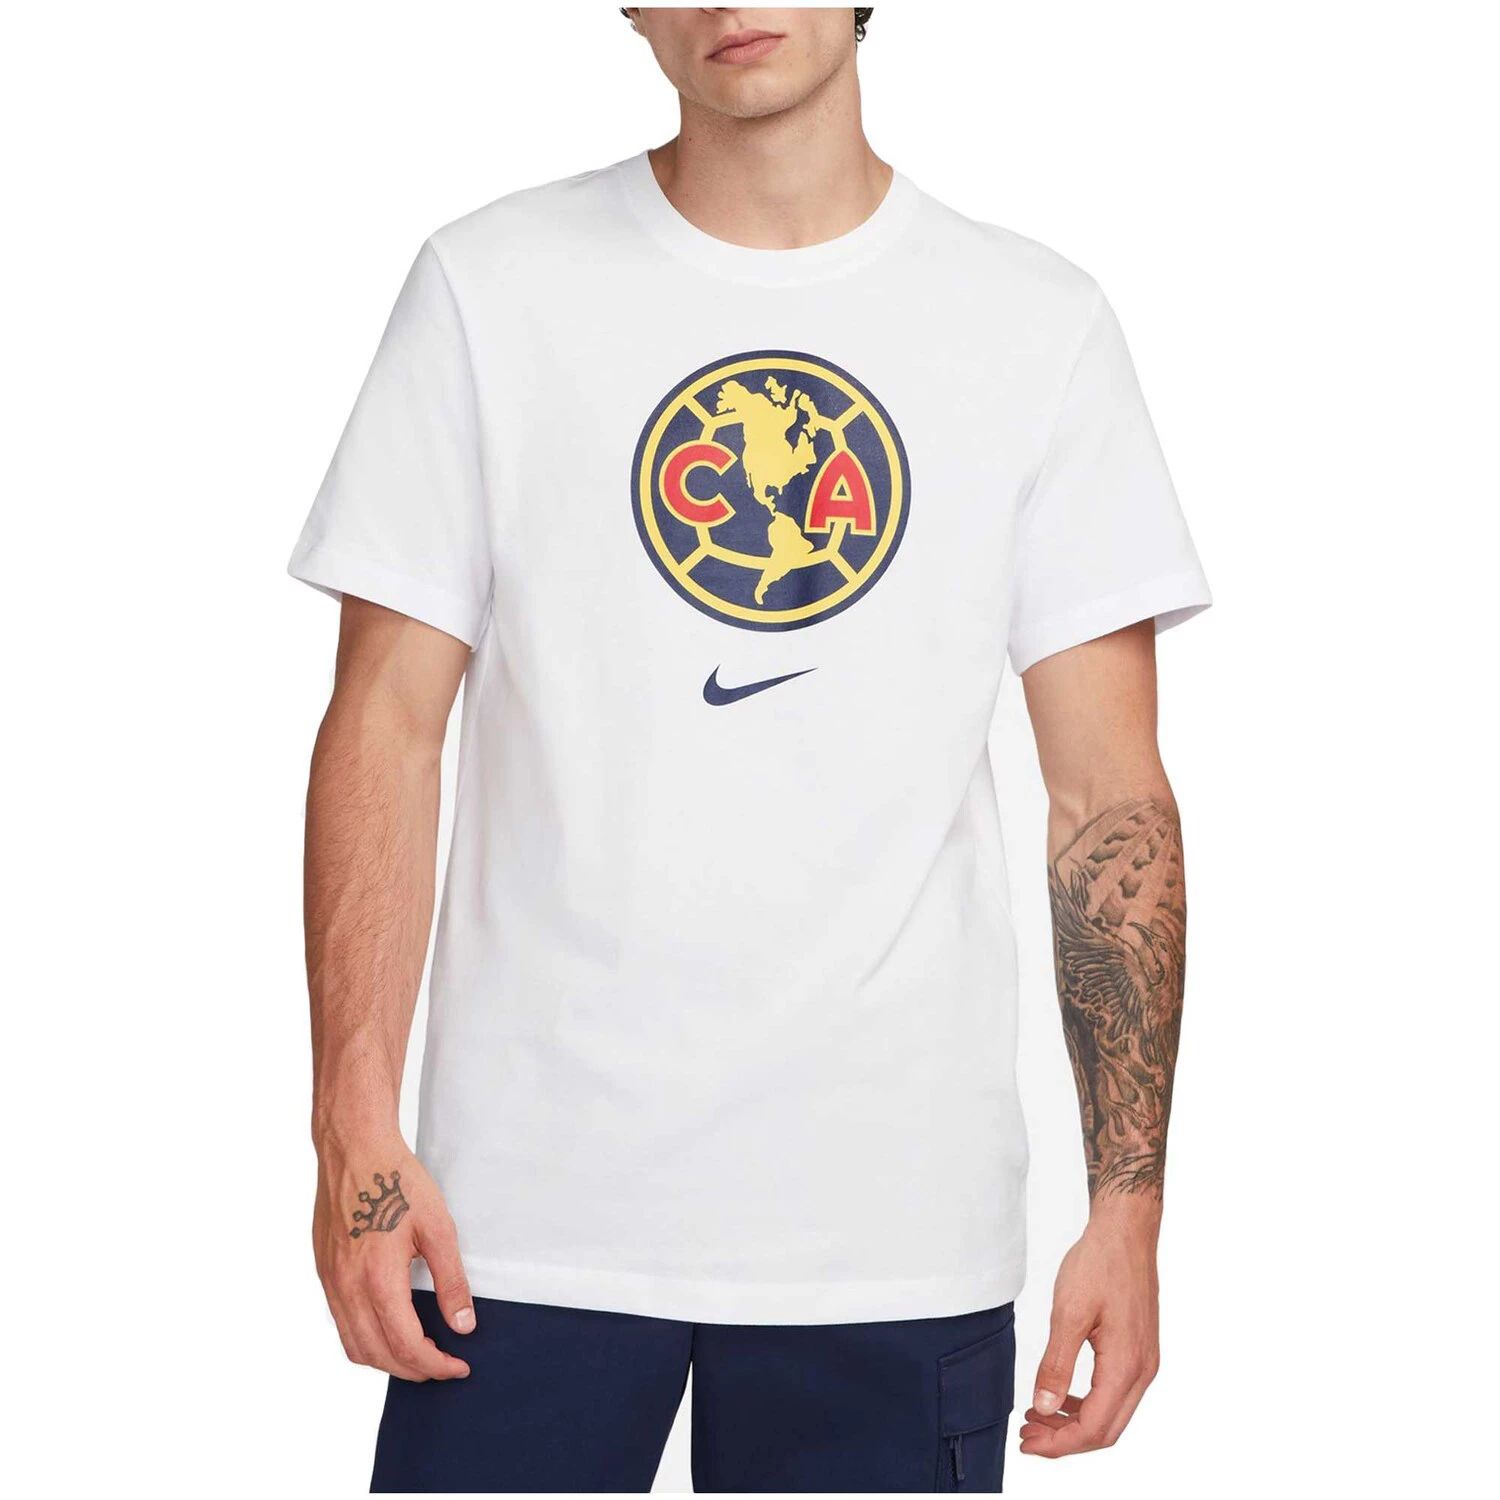 цена Мужская белая футболка Club America Crest Nike